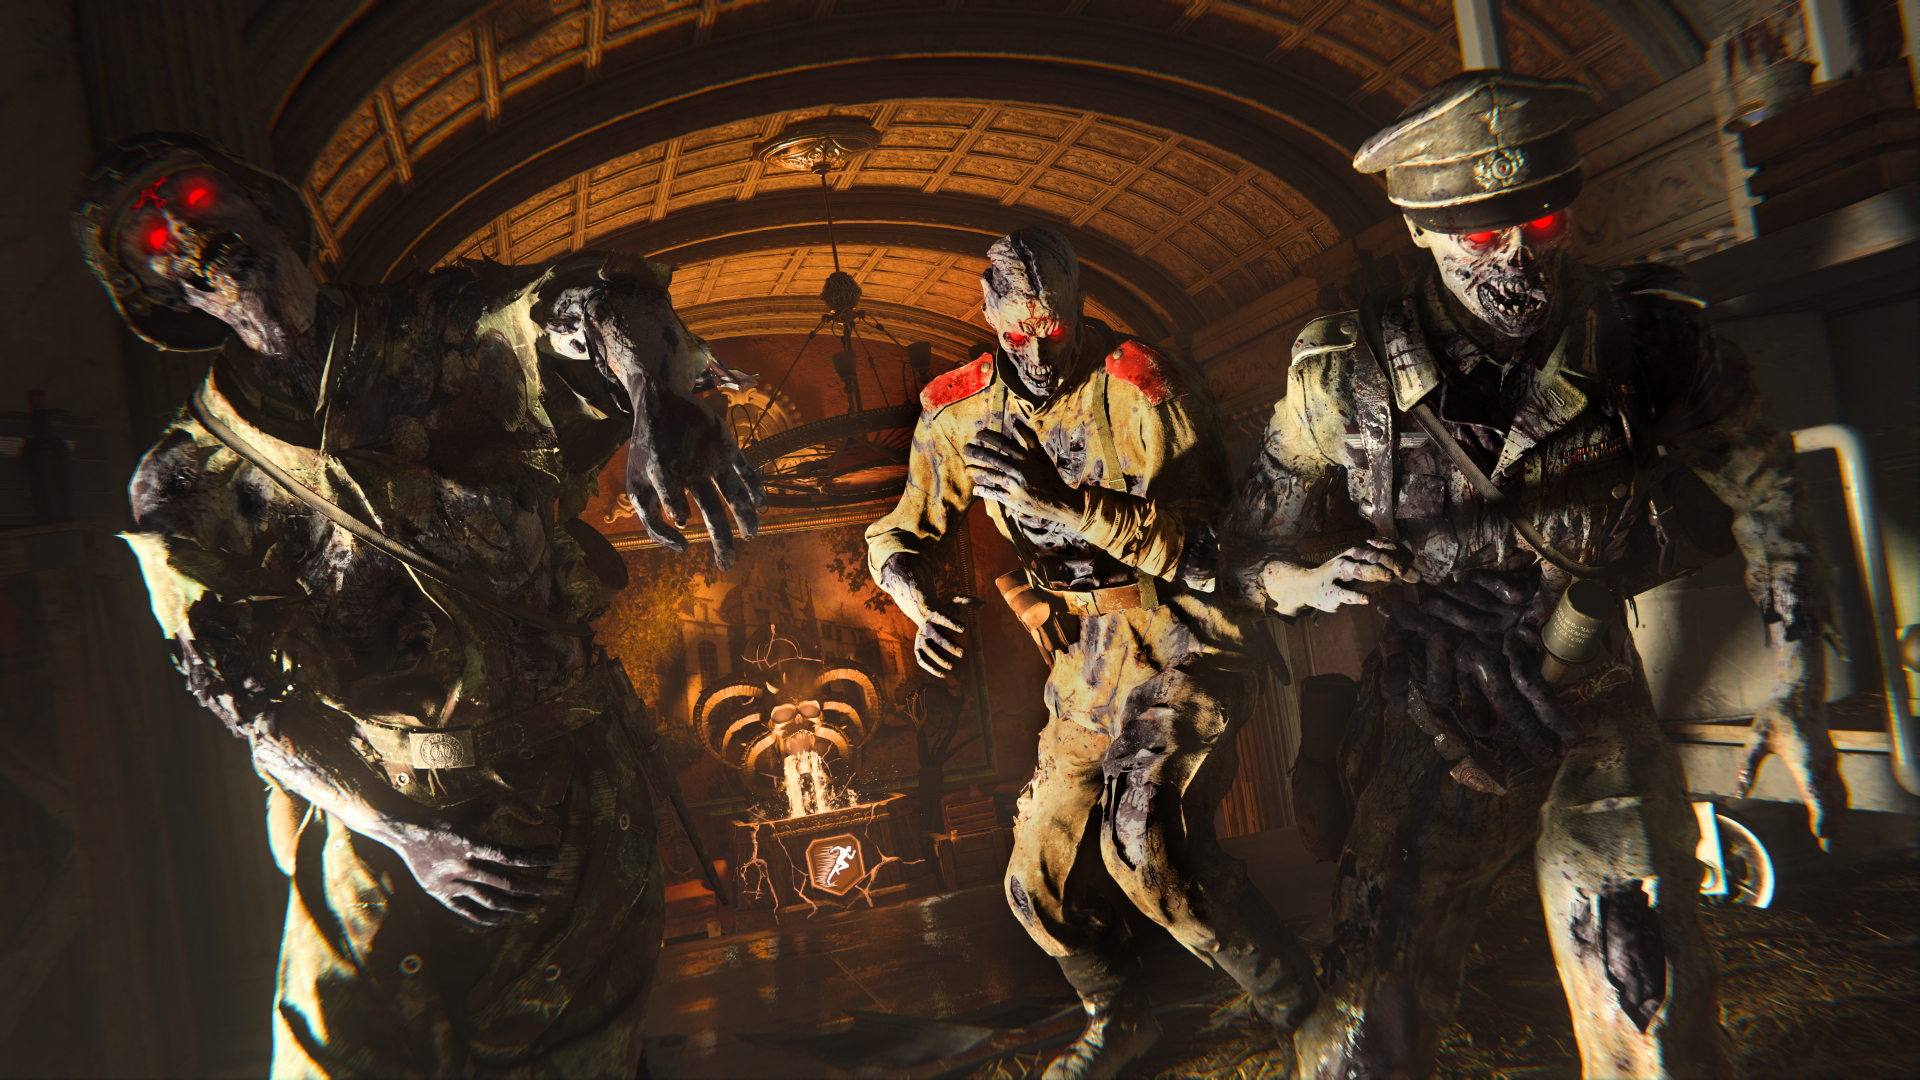 Call Of Duty: Vanguard' zombies mode premiering this week